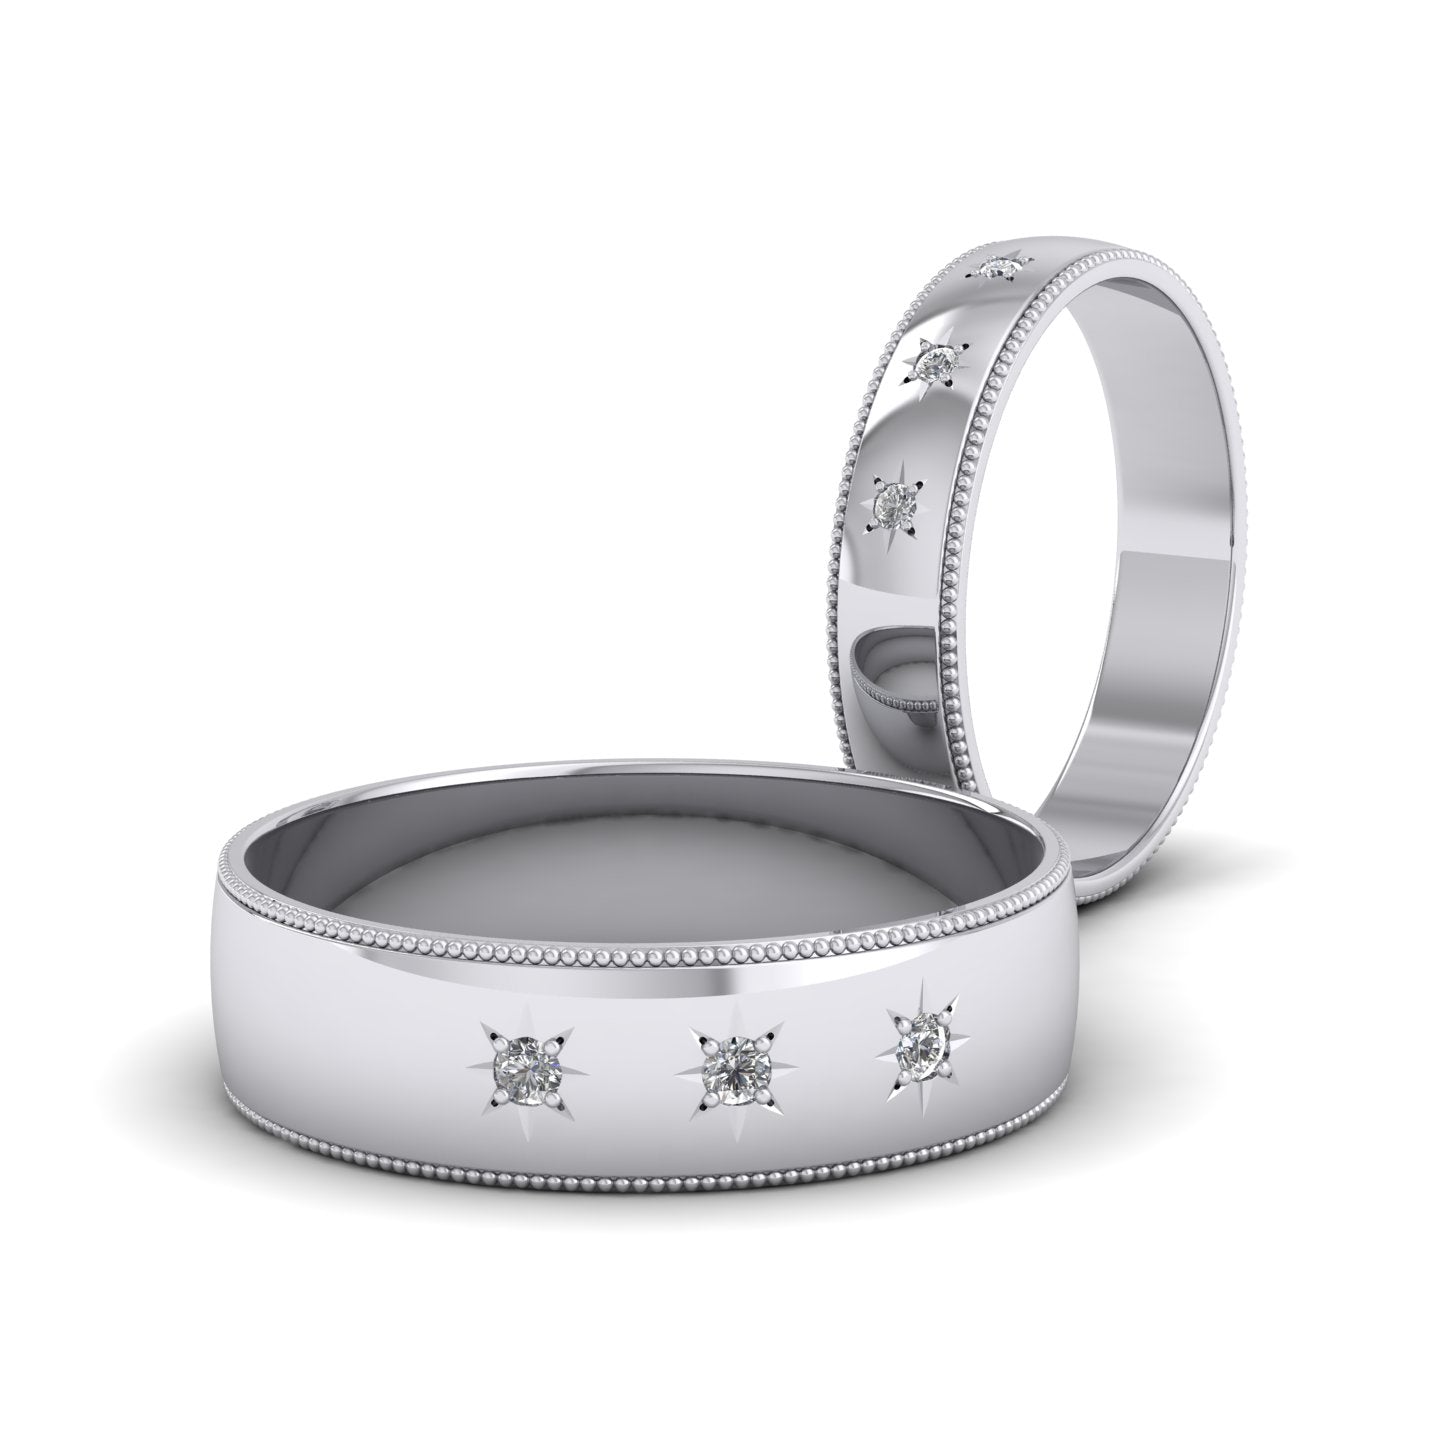 Millgrained Edge And Three Star Diamond Set 950 Platinum 6mm Wedding Ring